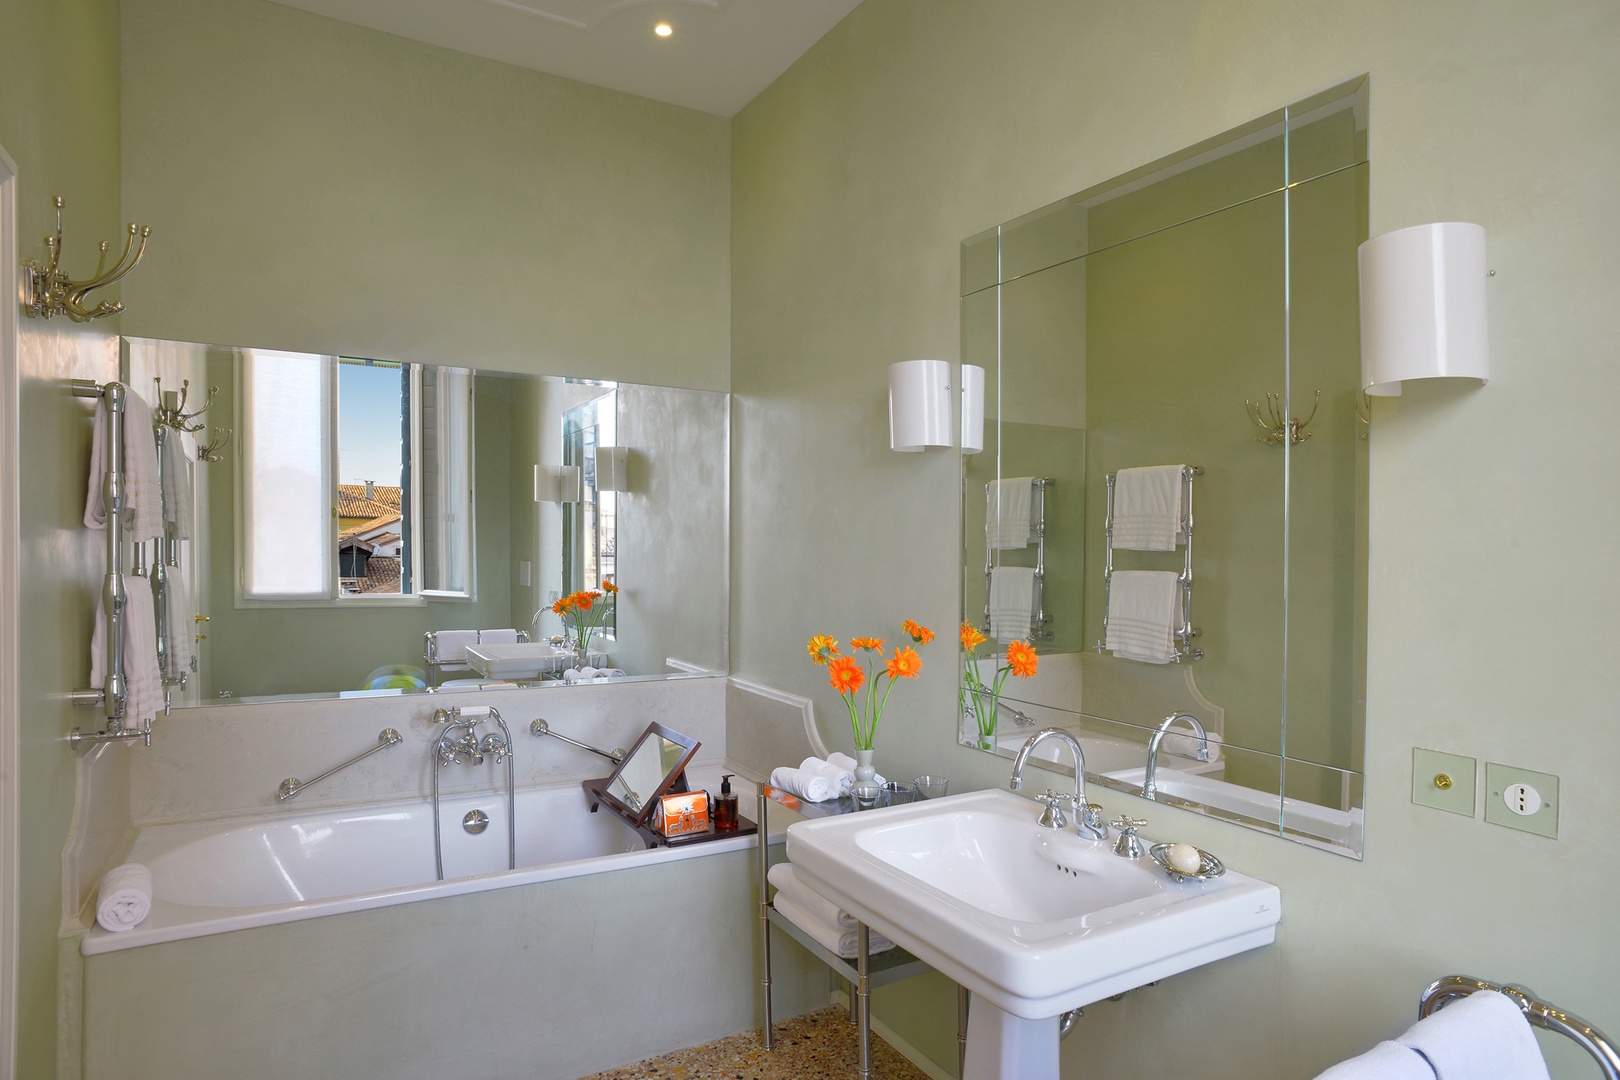 En suite bathroom for bedroom 1 with bathtub and handheld showerhead.